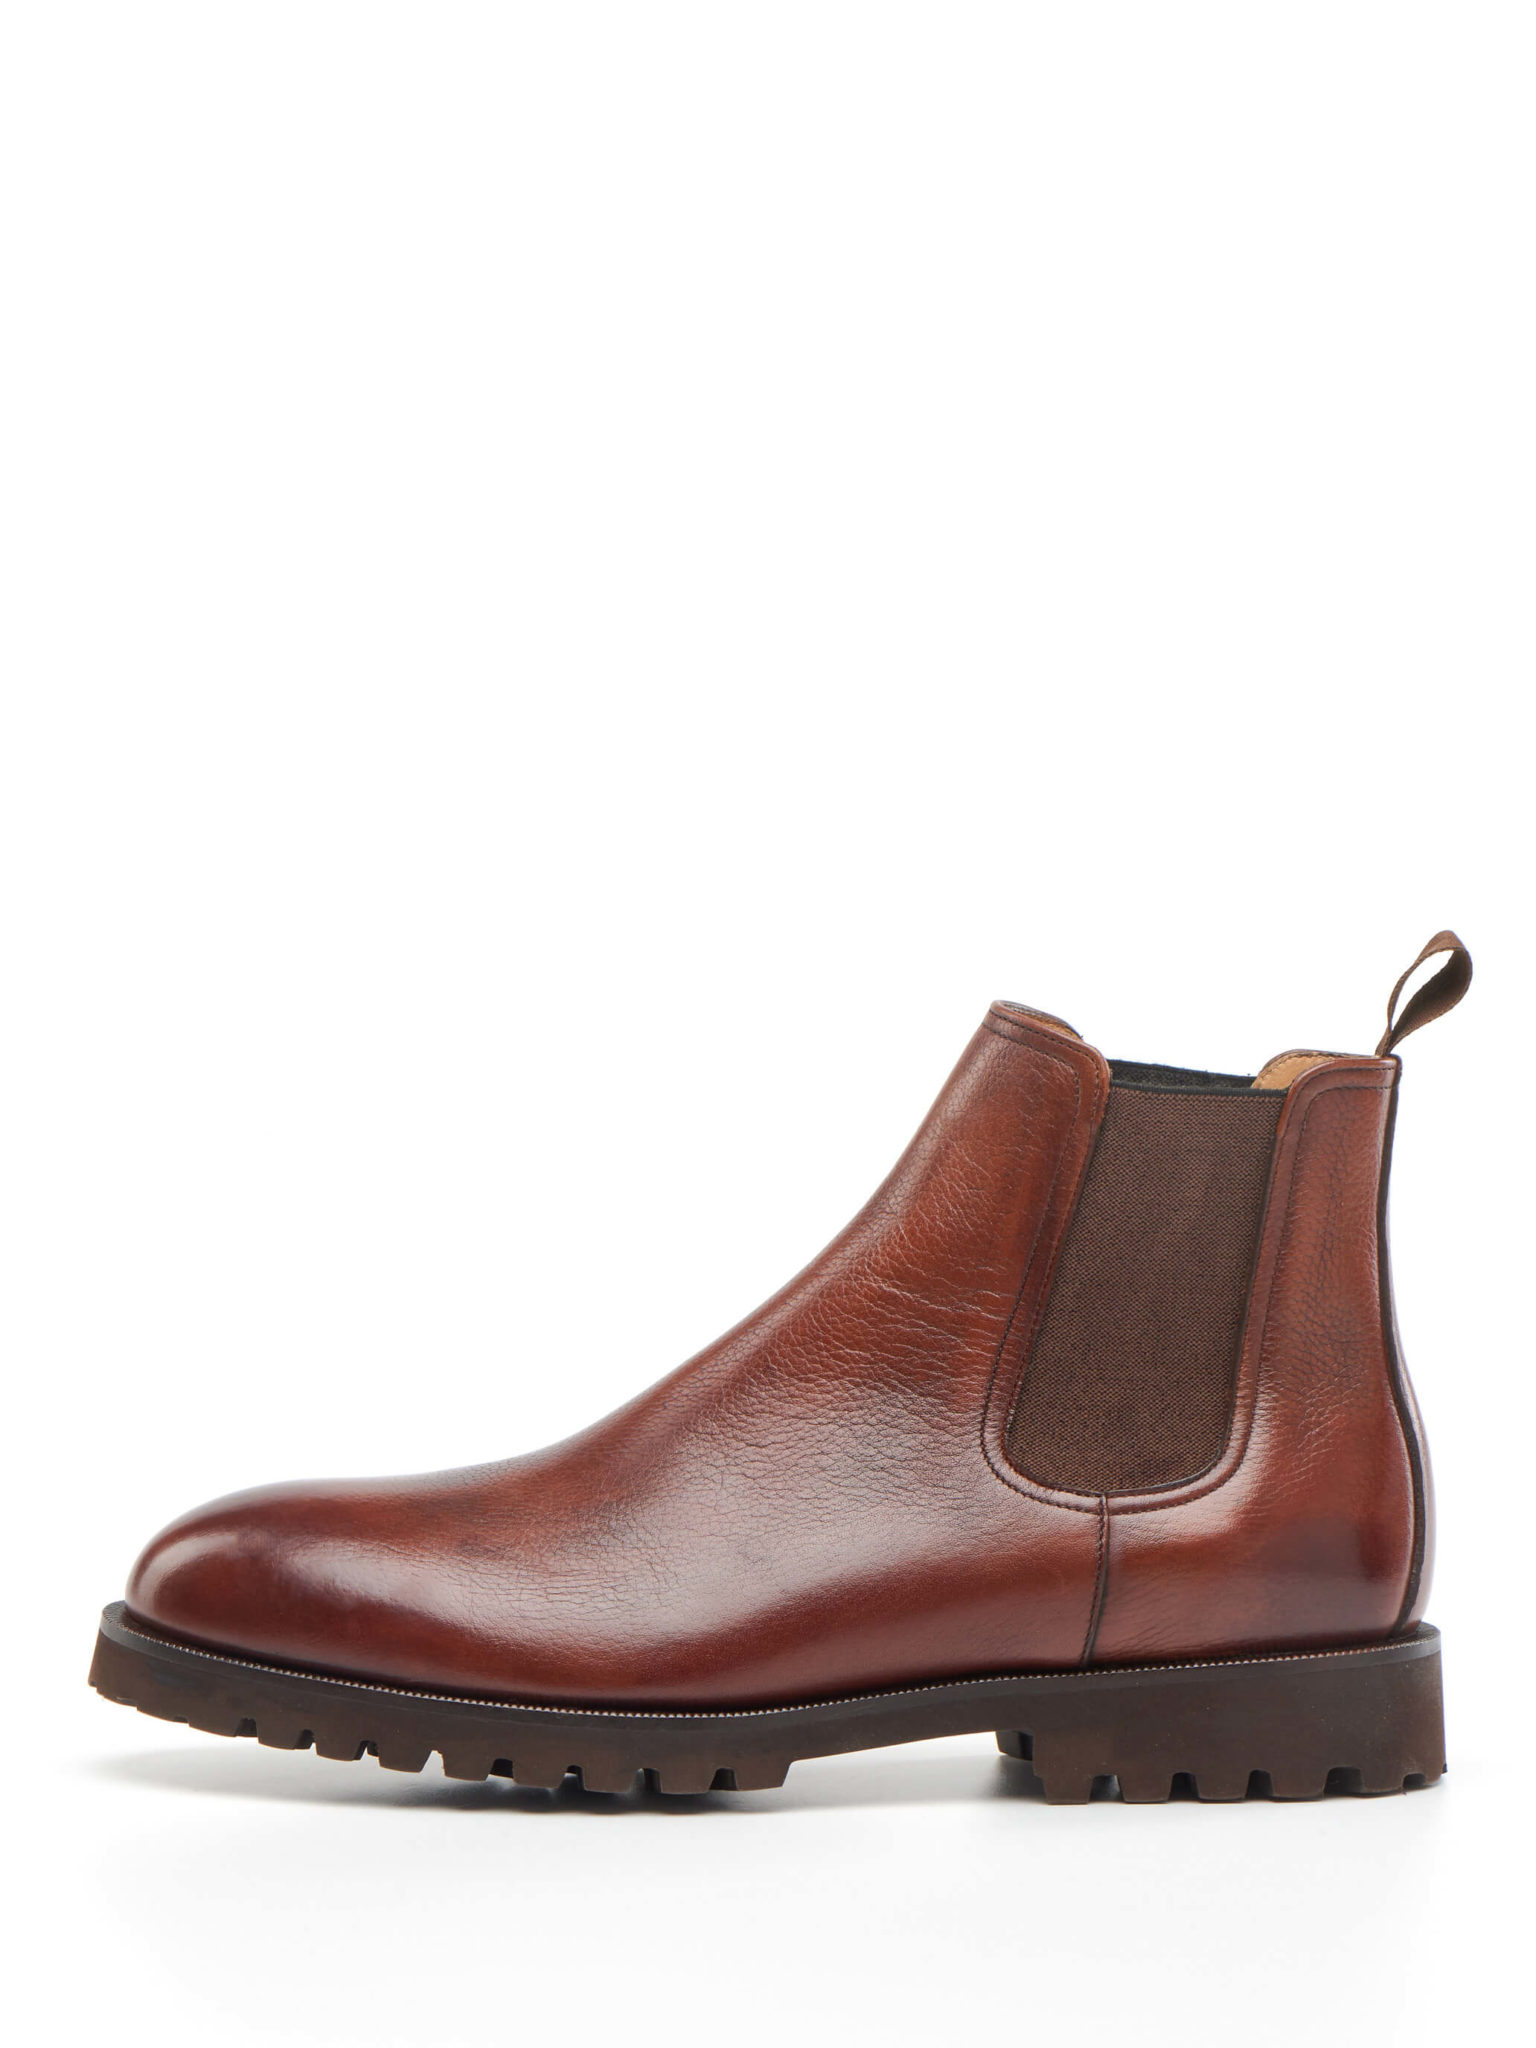 leather Chelsea boots- Luis Onofre - Portuguese Design Shoes